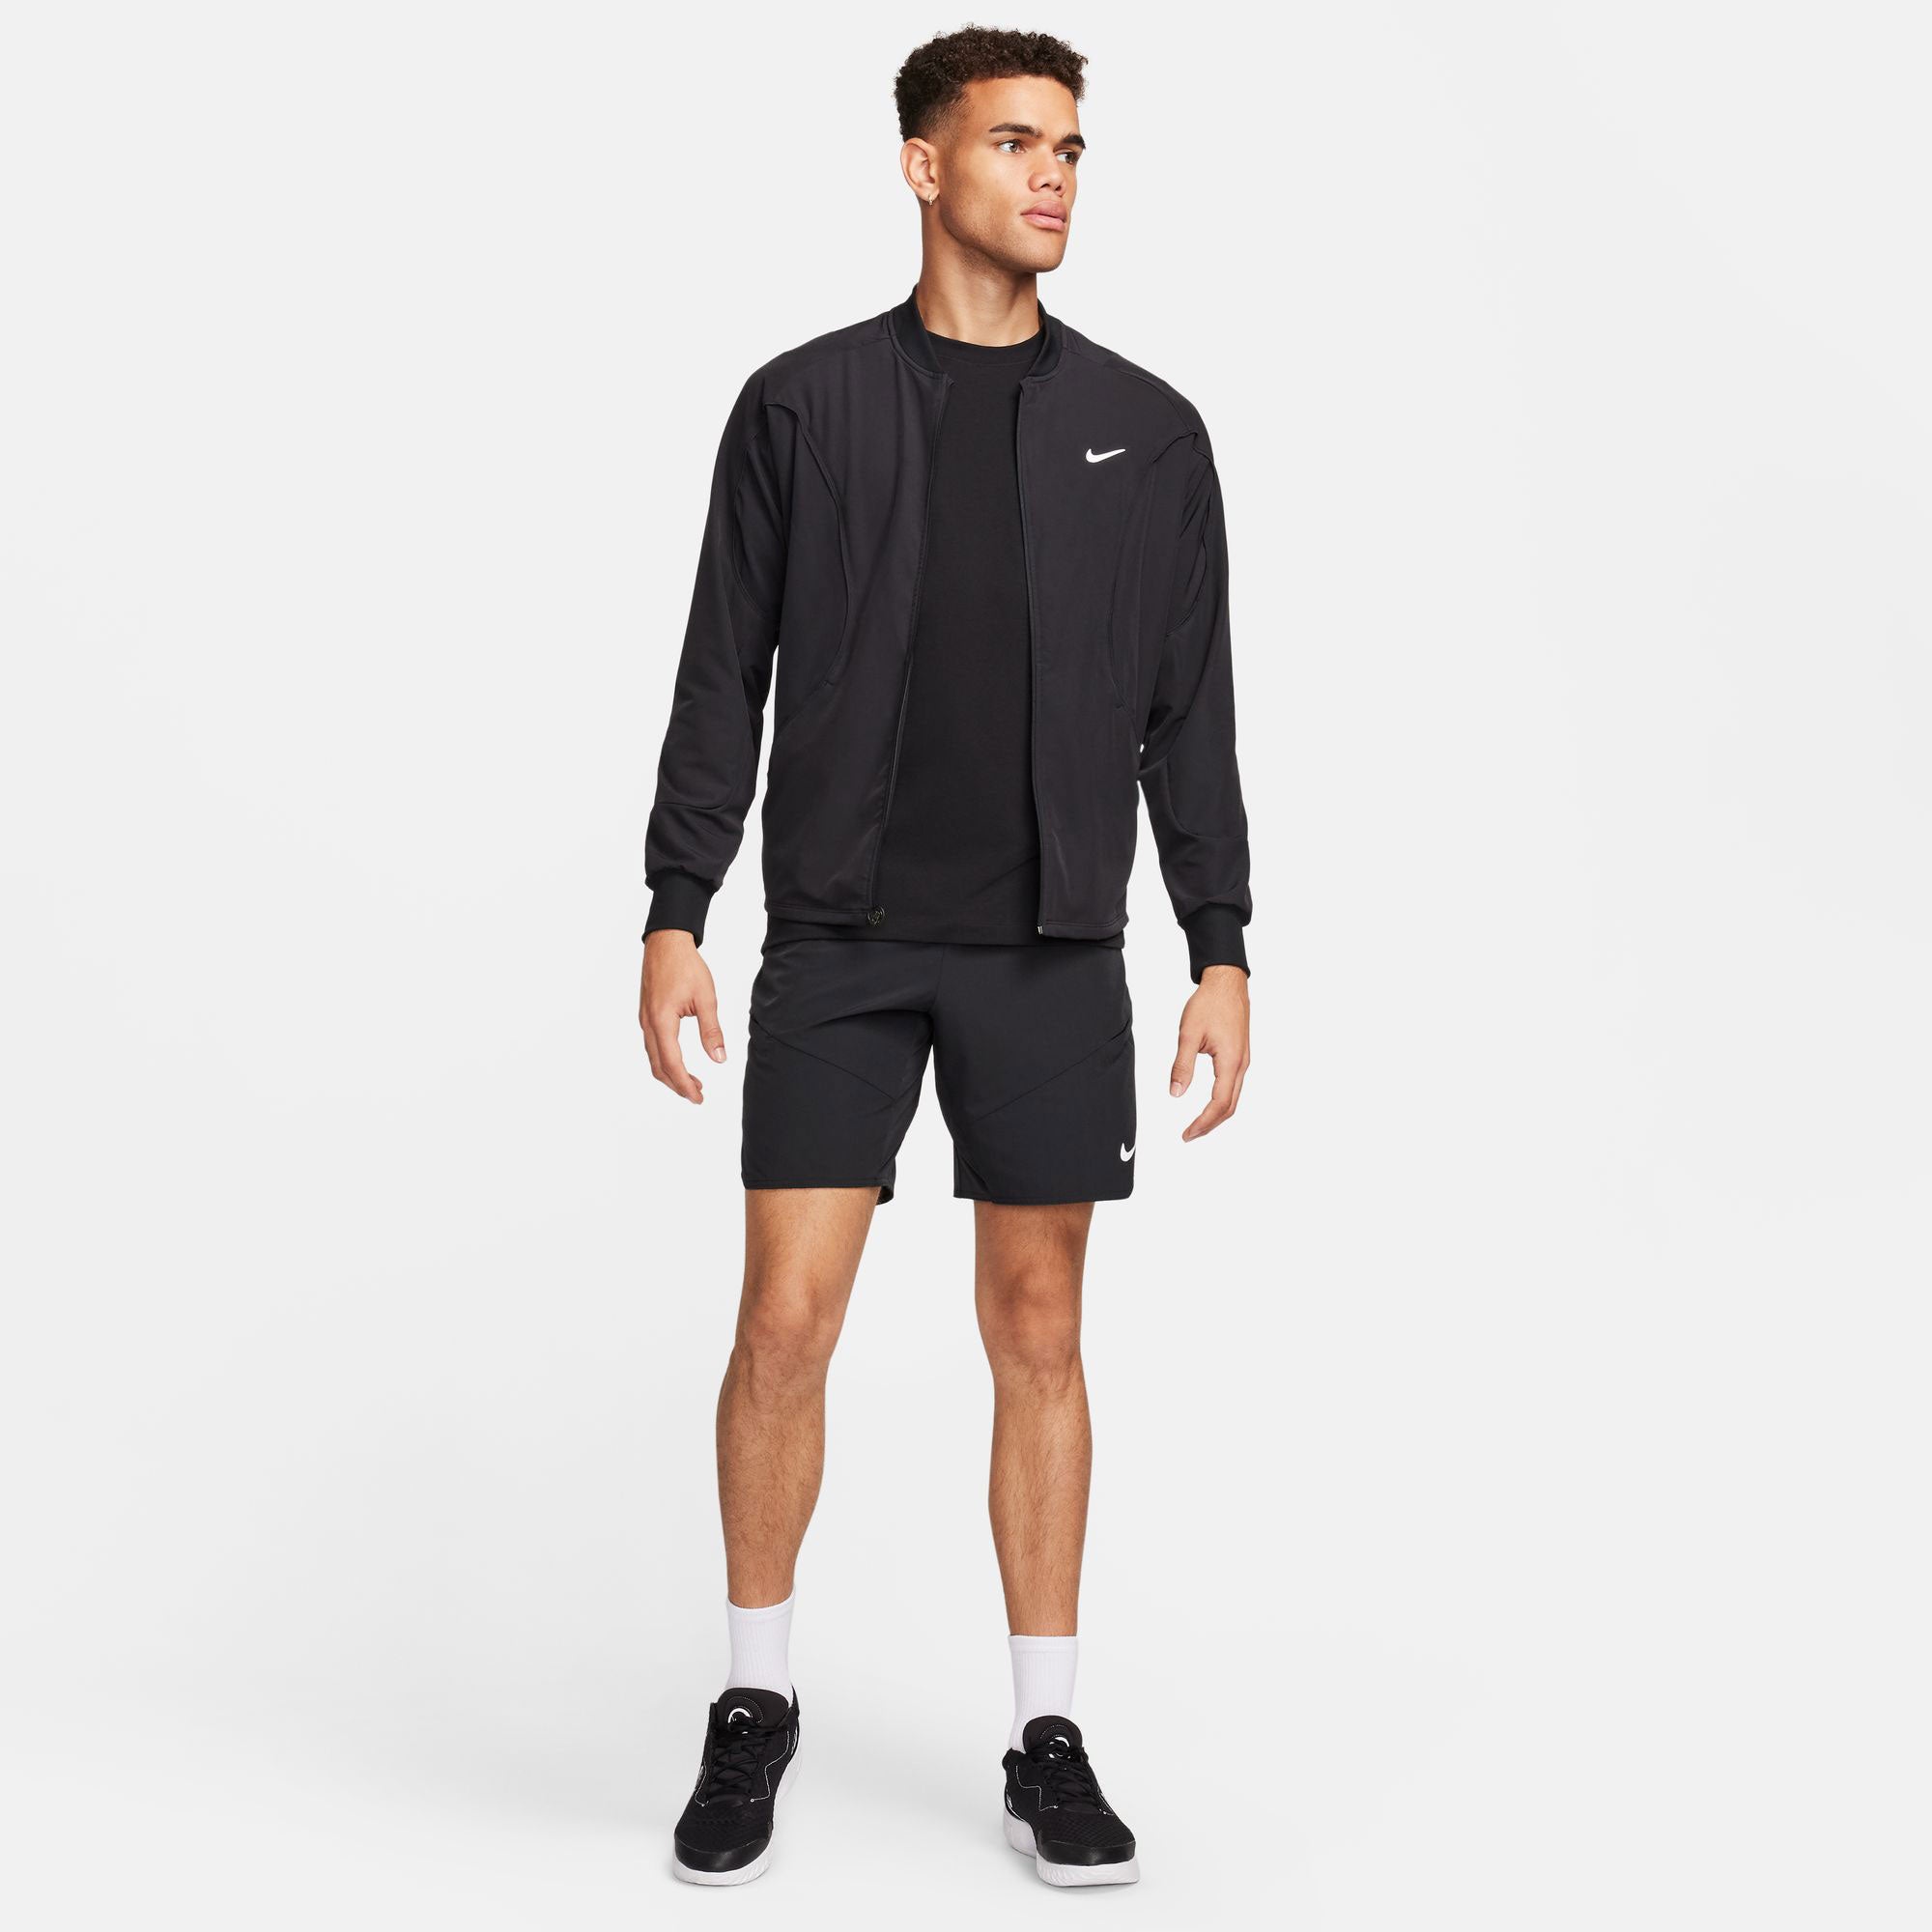 NikeCourt Advantage Men's Dri-FIT Tennis Jacket - Black (7)